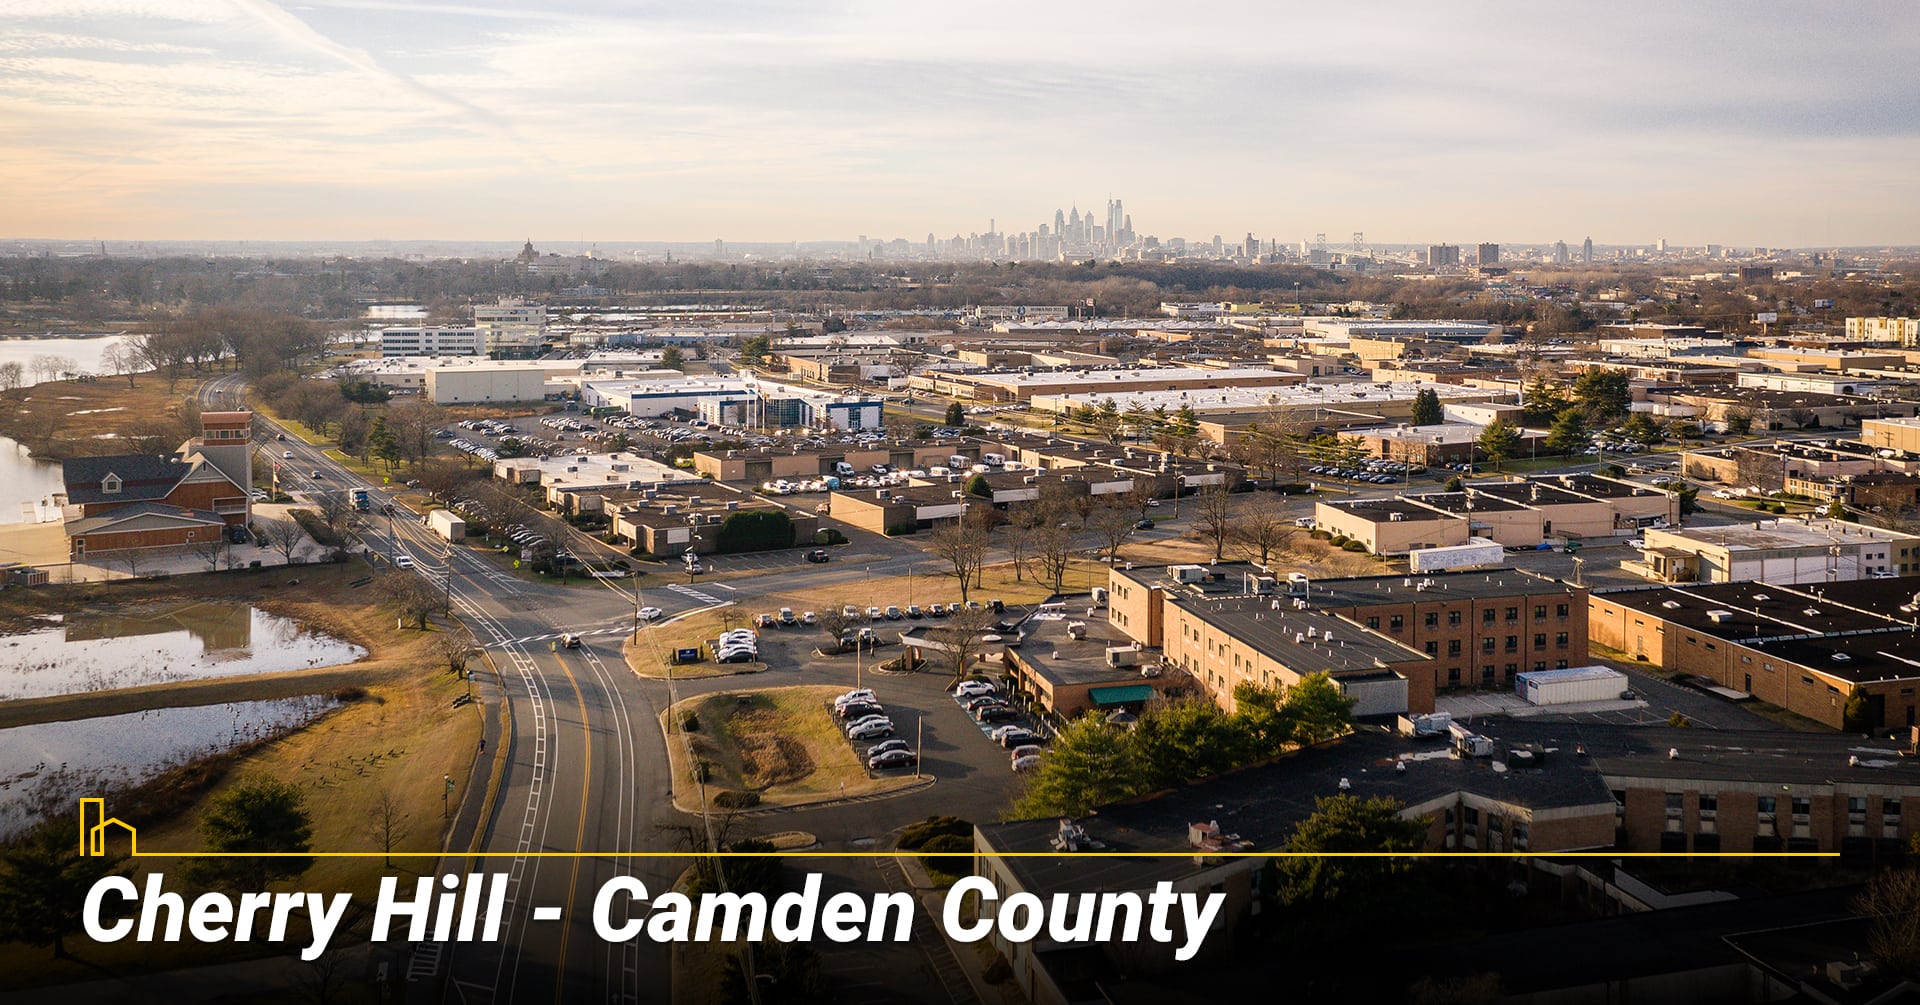 Cherry Hill - Camden County